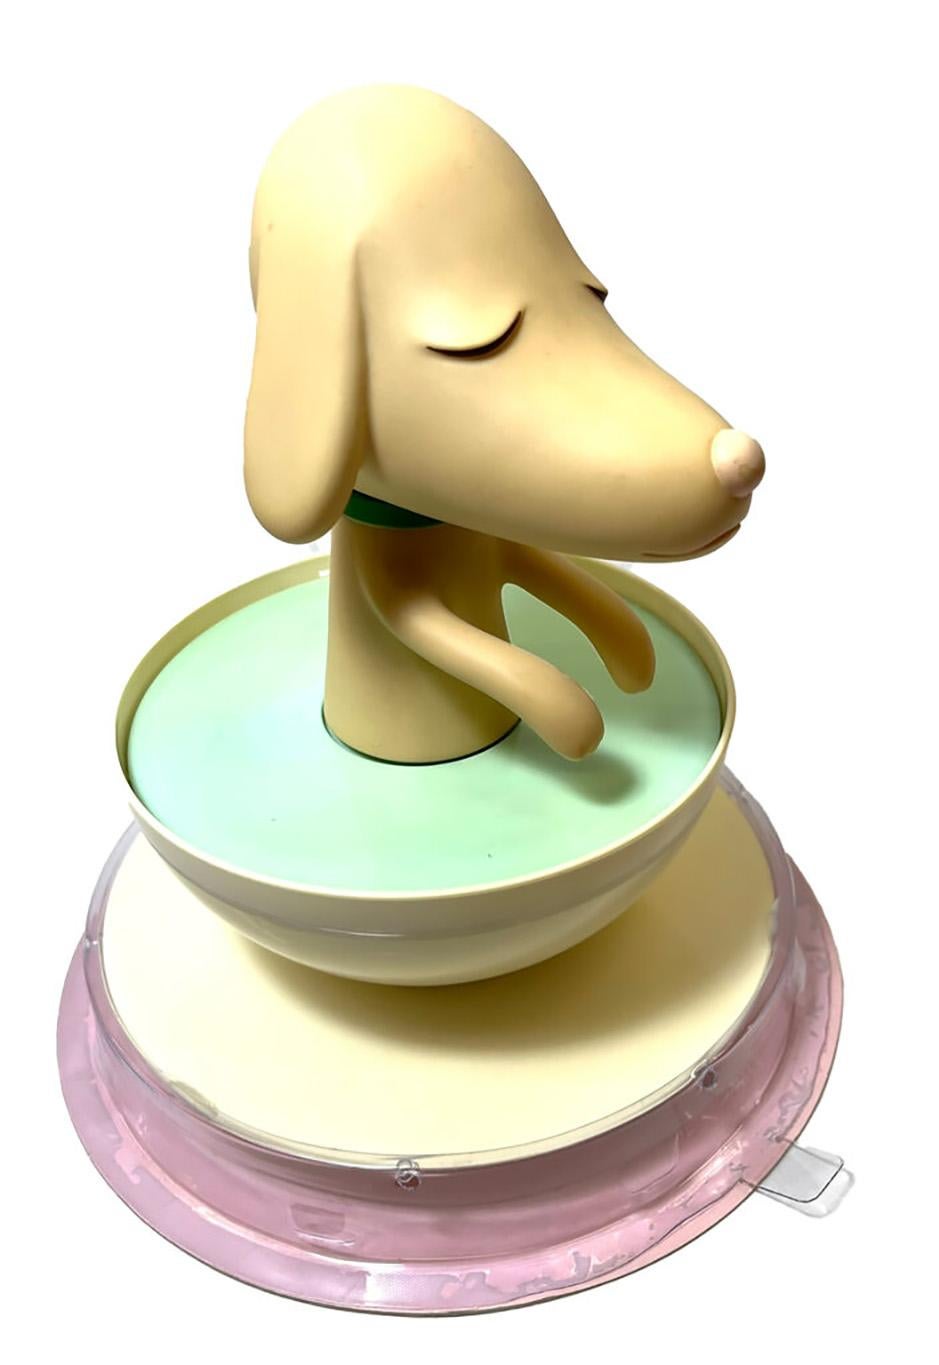 Yoshimoto Pup Cup art toy 2003 (Yoshitomo Nara Pup Cup 2003) For Sale 5